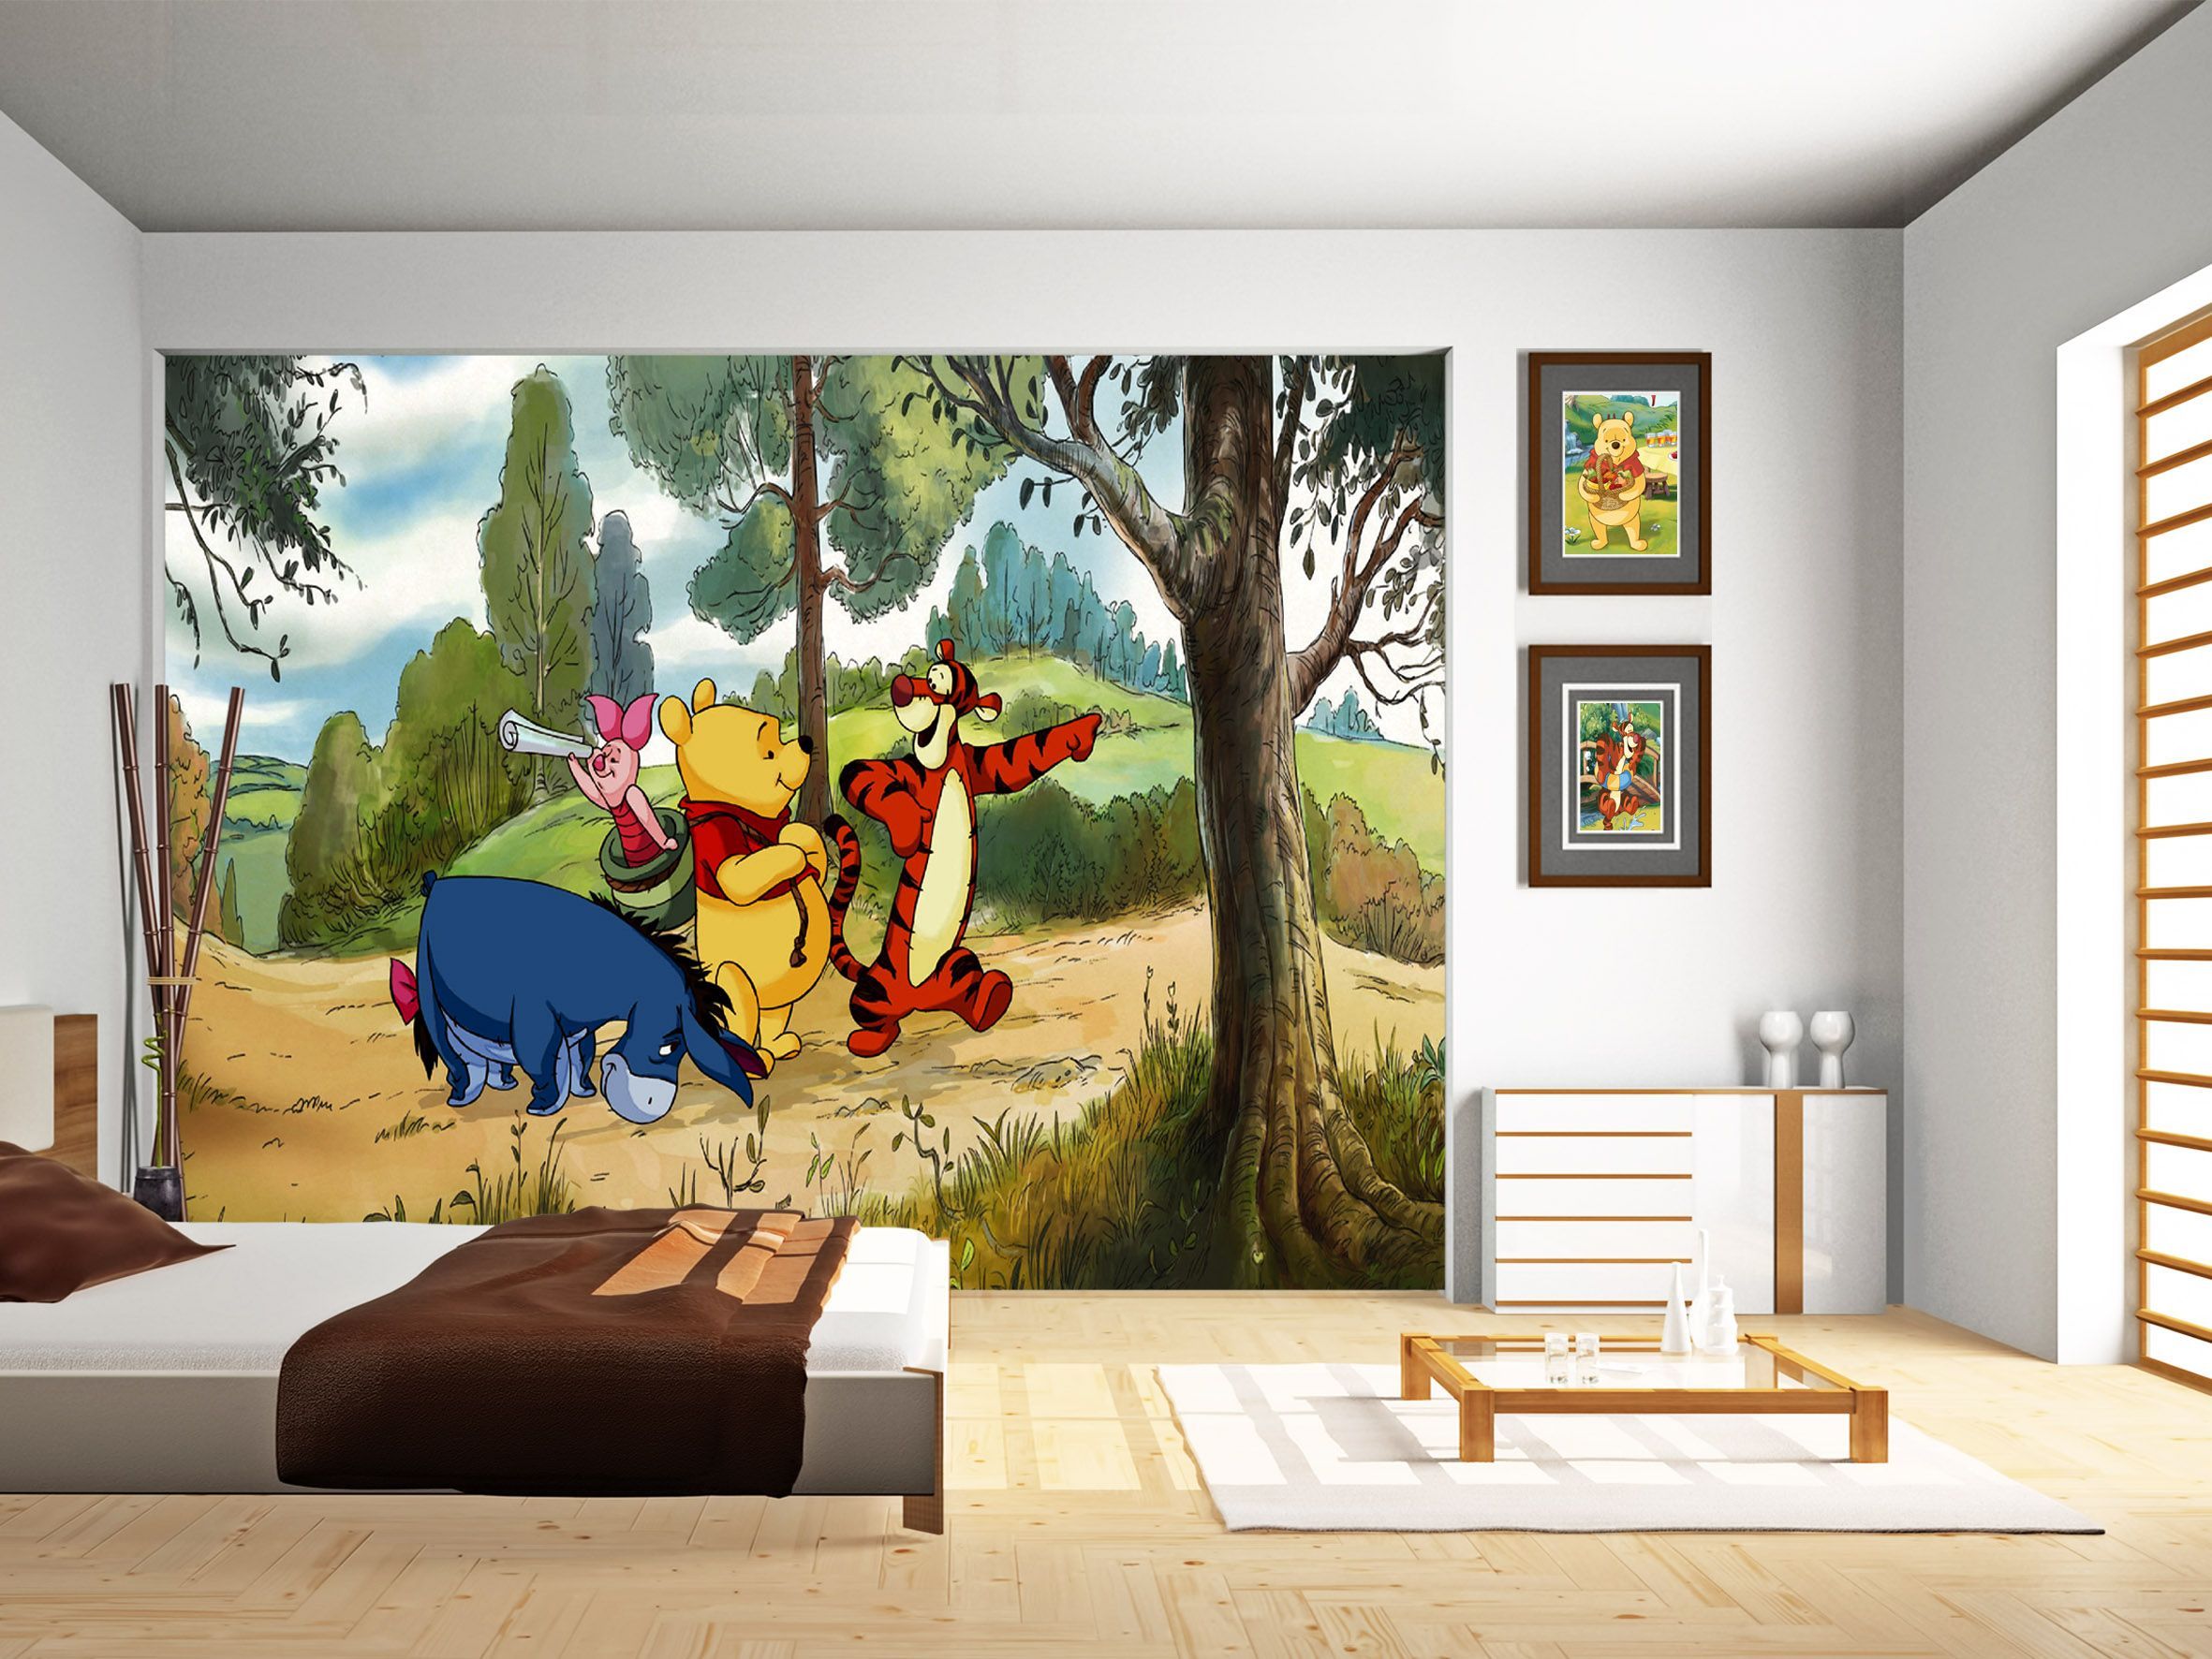 Wallpaper for Kids Room Delhi 3D  Customized  SNG Royal